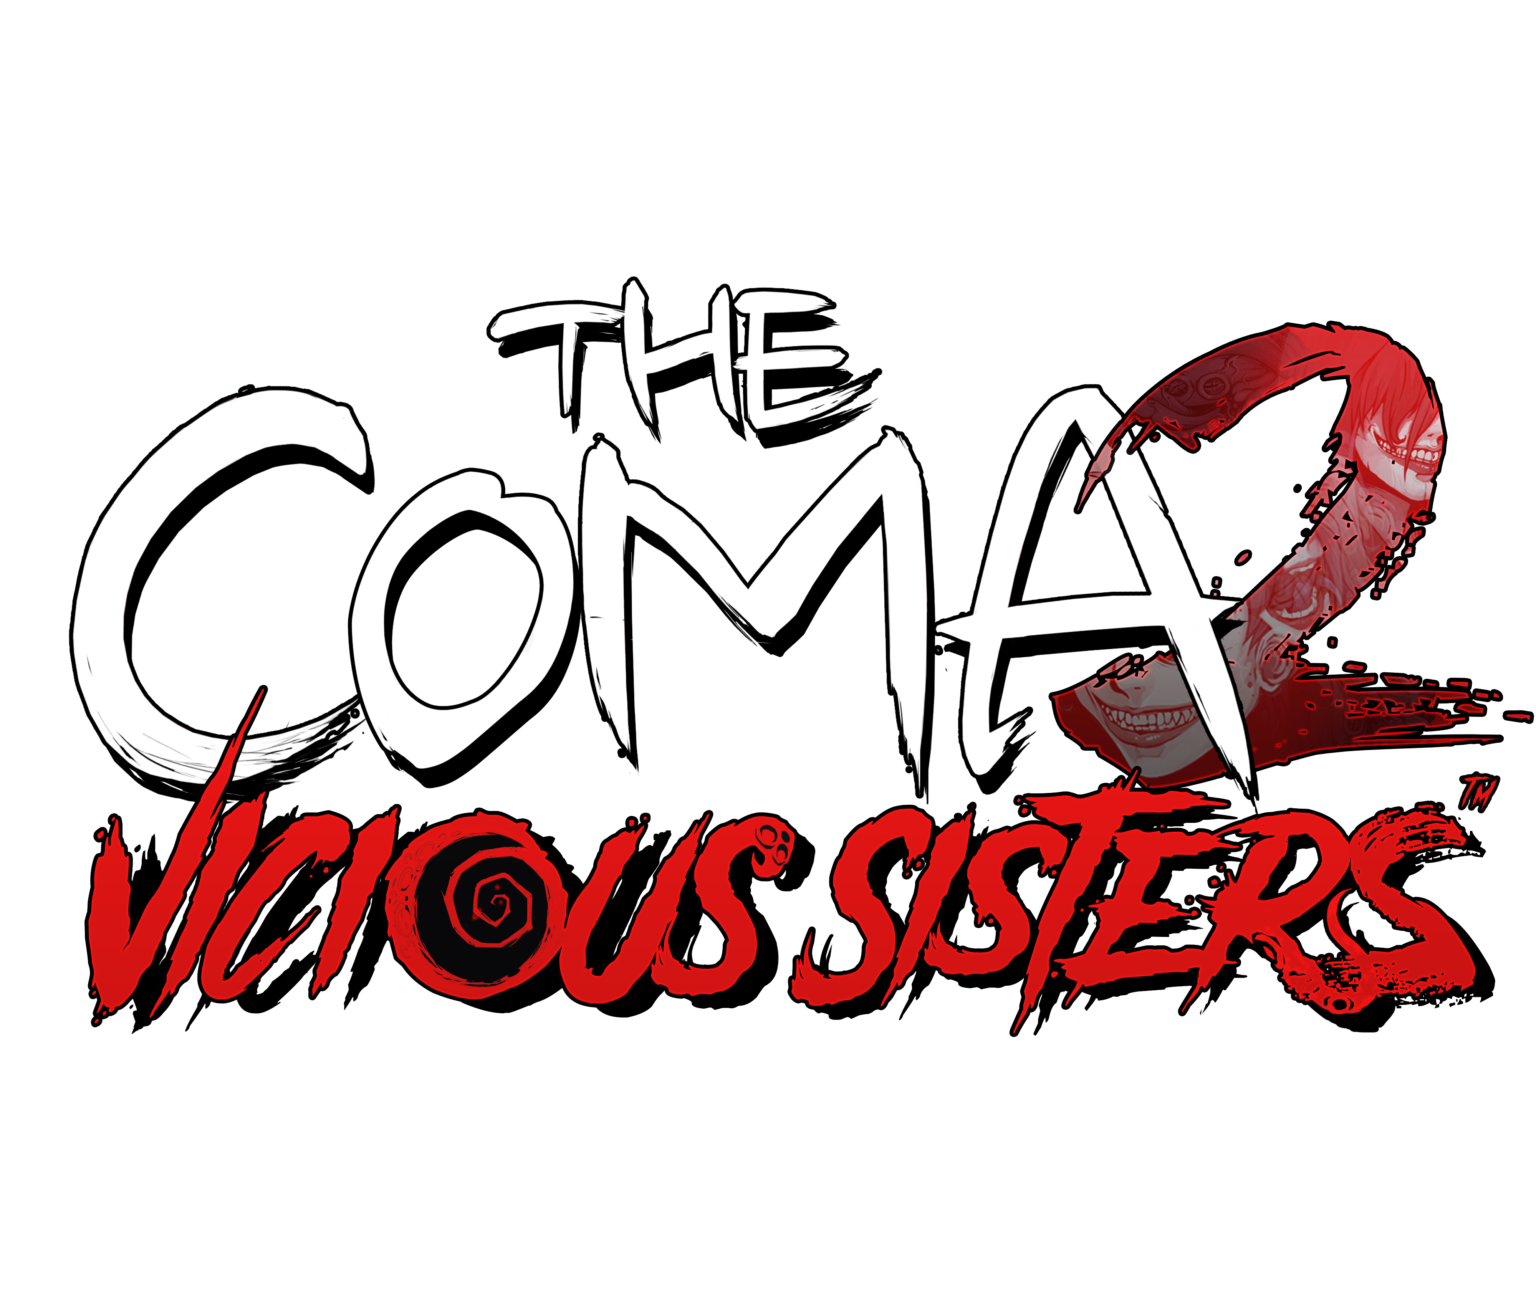 The coma 2 Vicious sisters Токкеби. Логотип кома игры. Coma vicious sisters